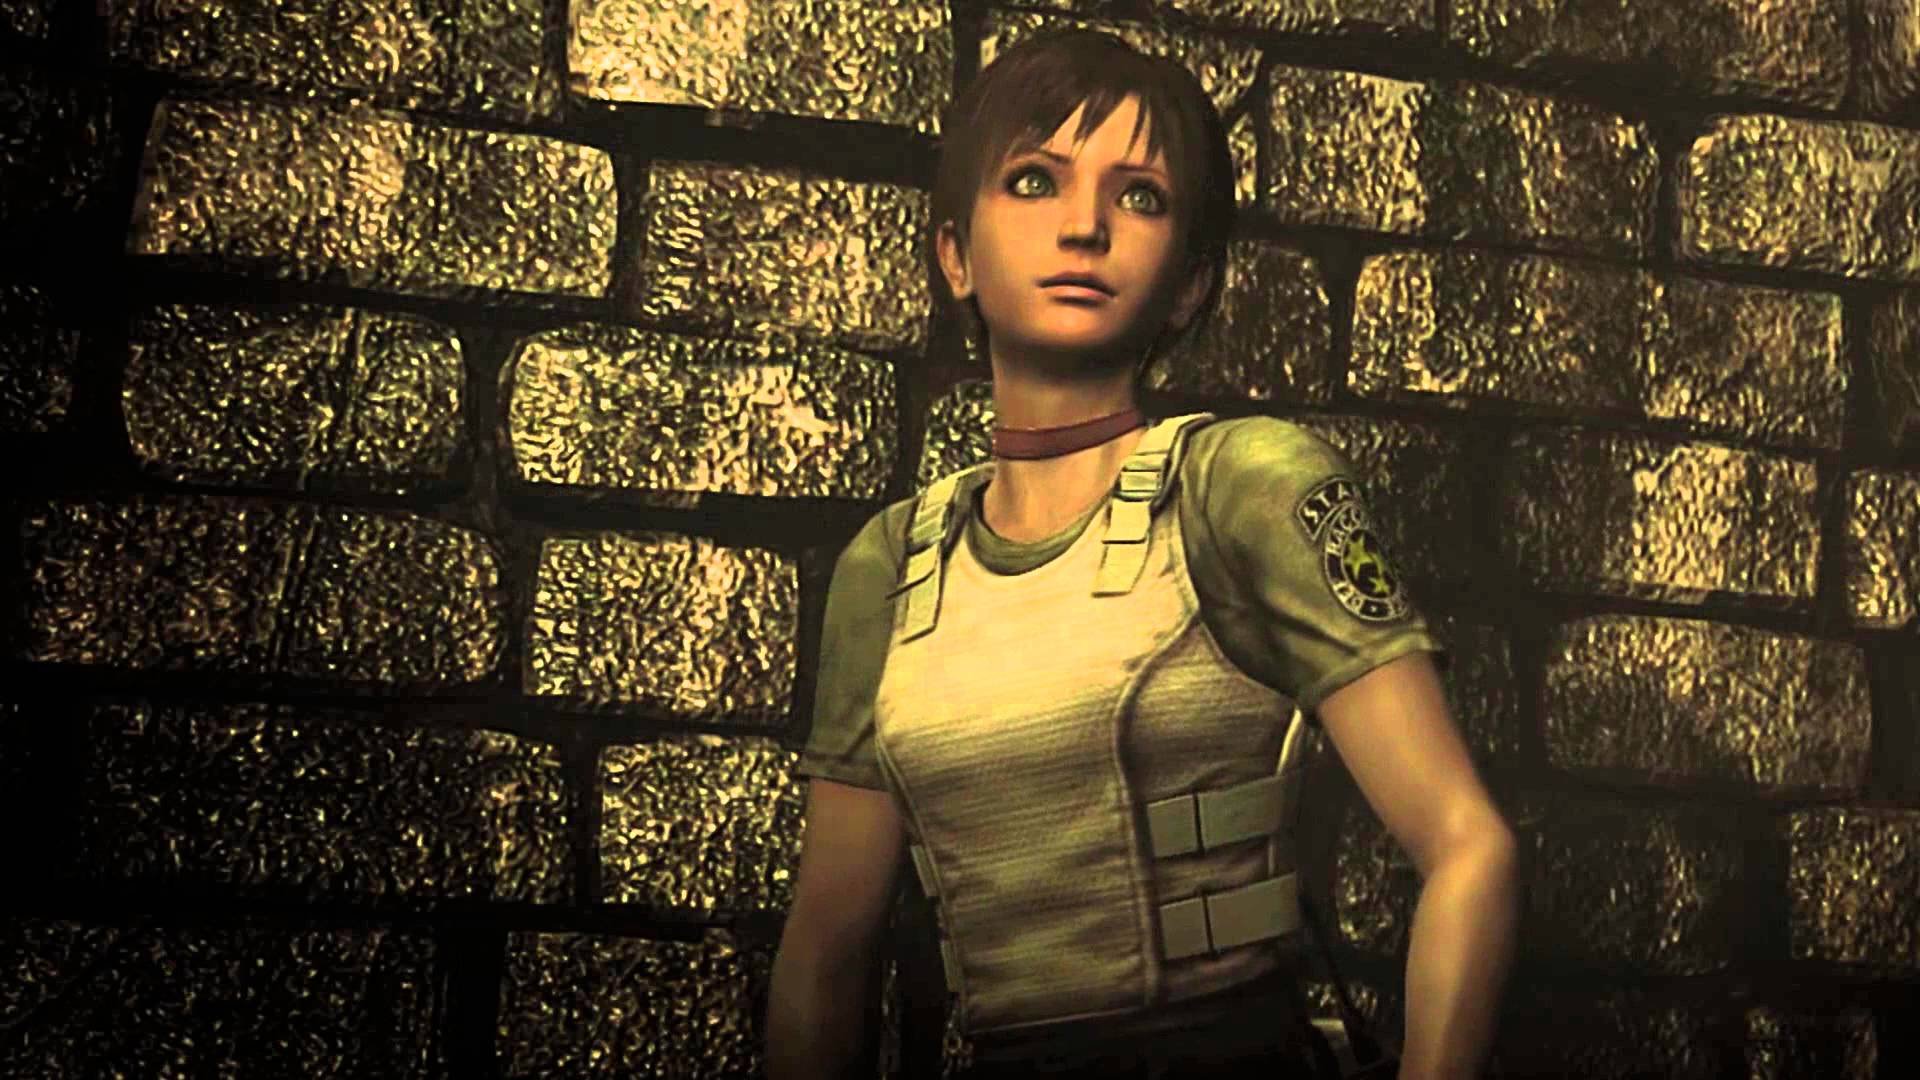 Resident Evil Origins Collection 3